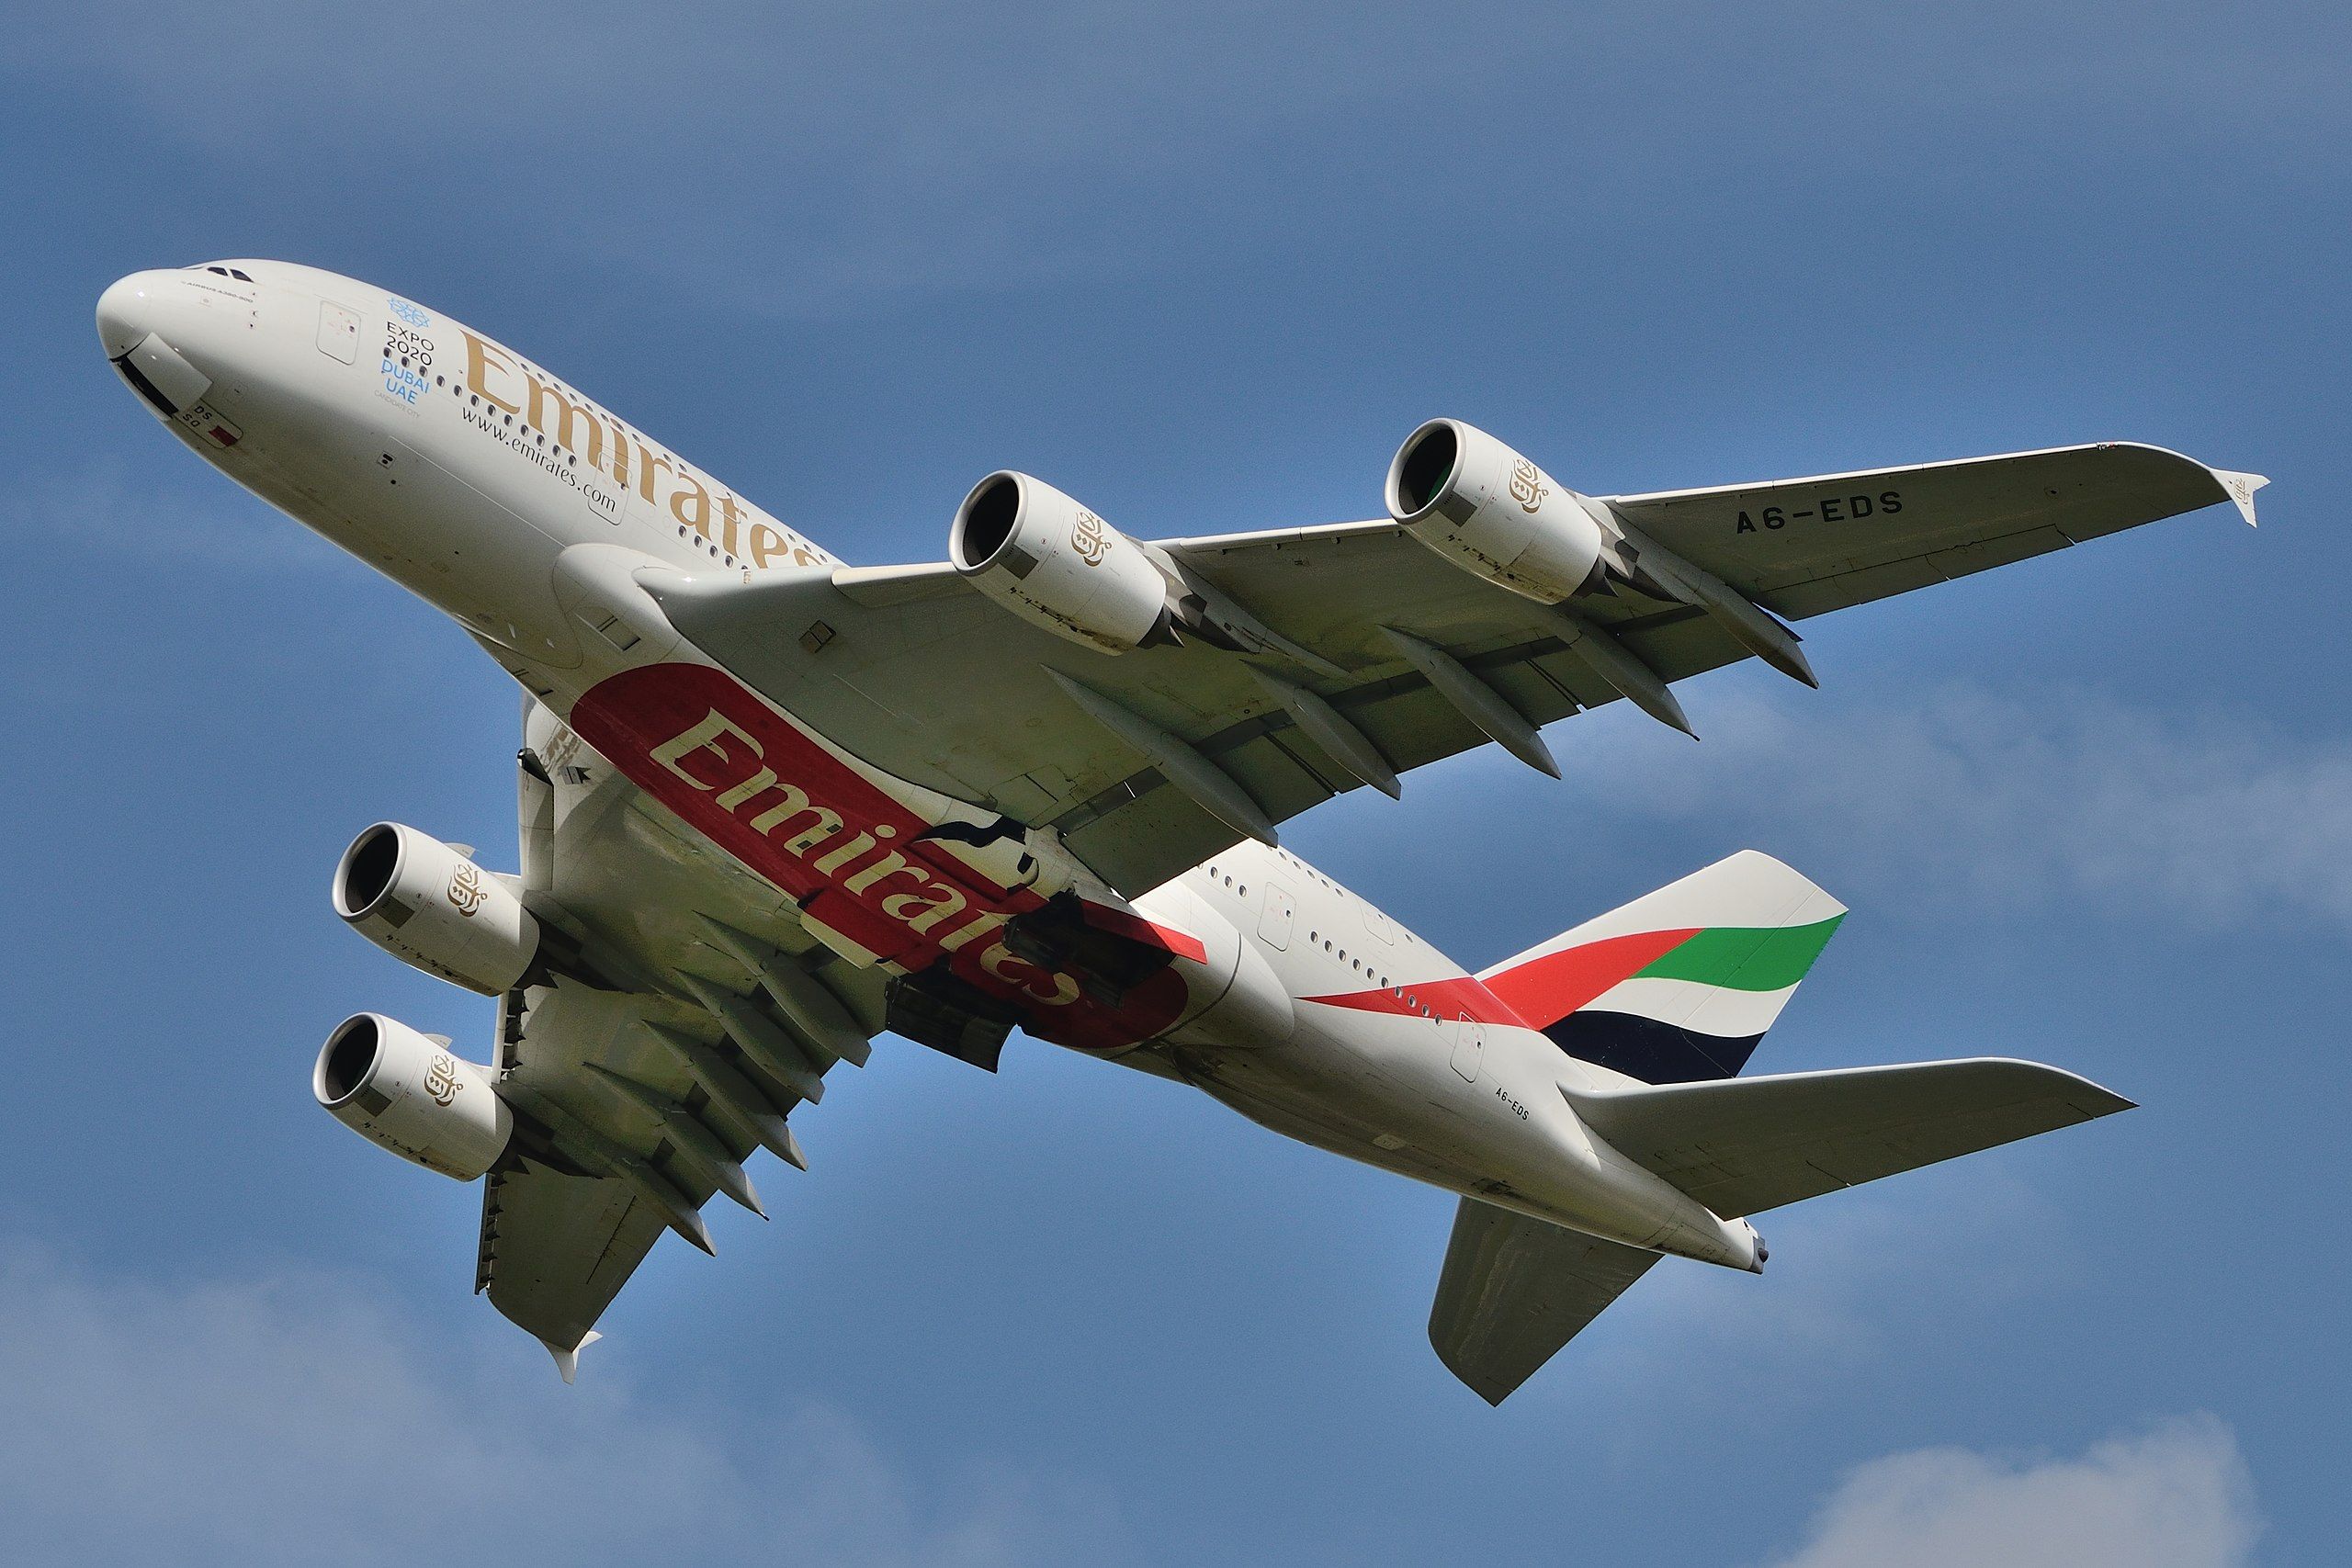 Emirates A380 take off